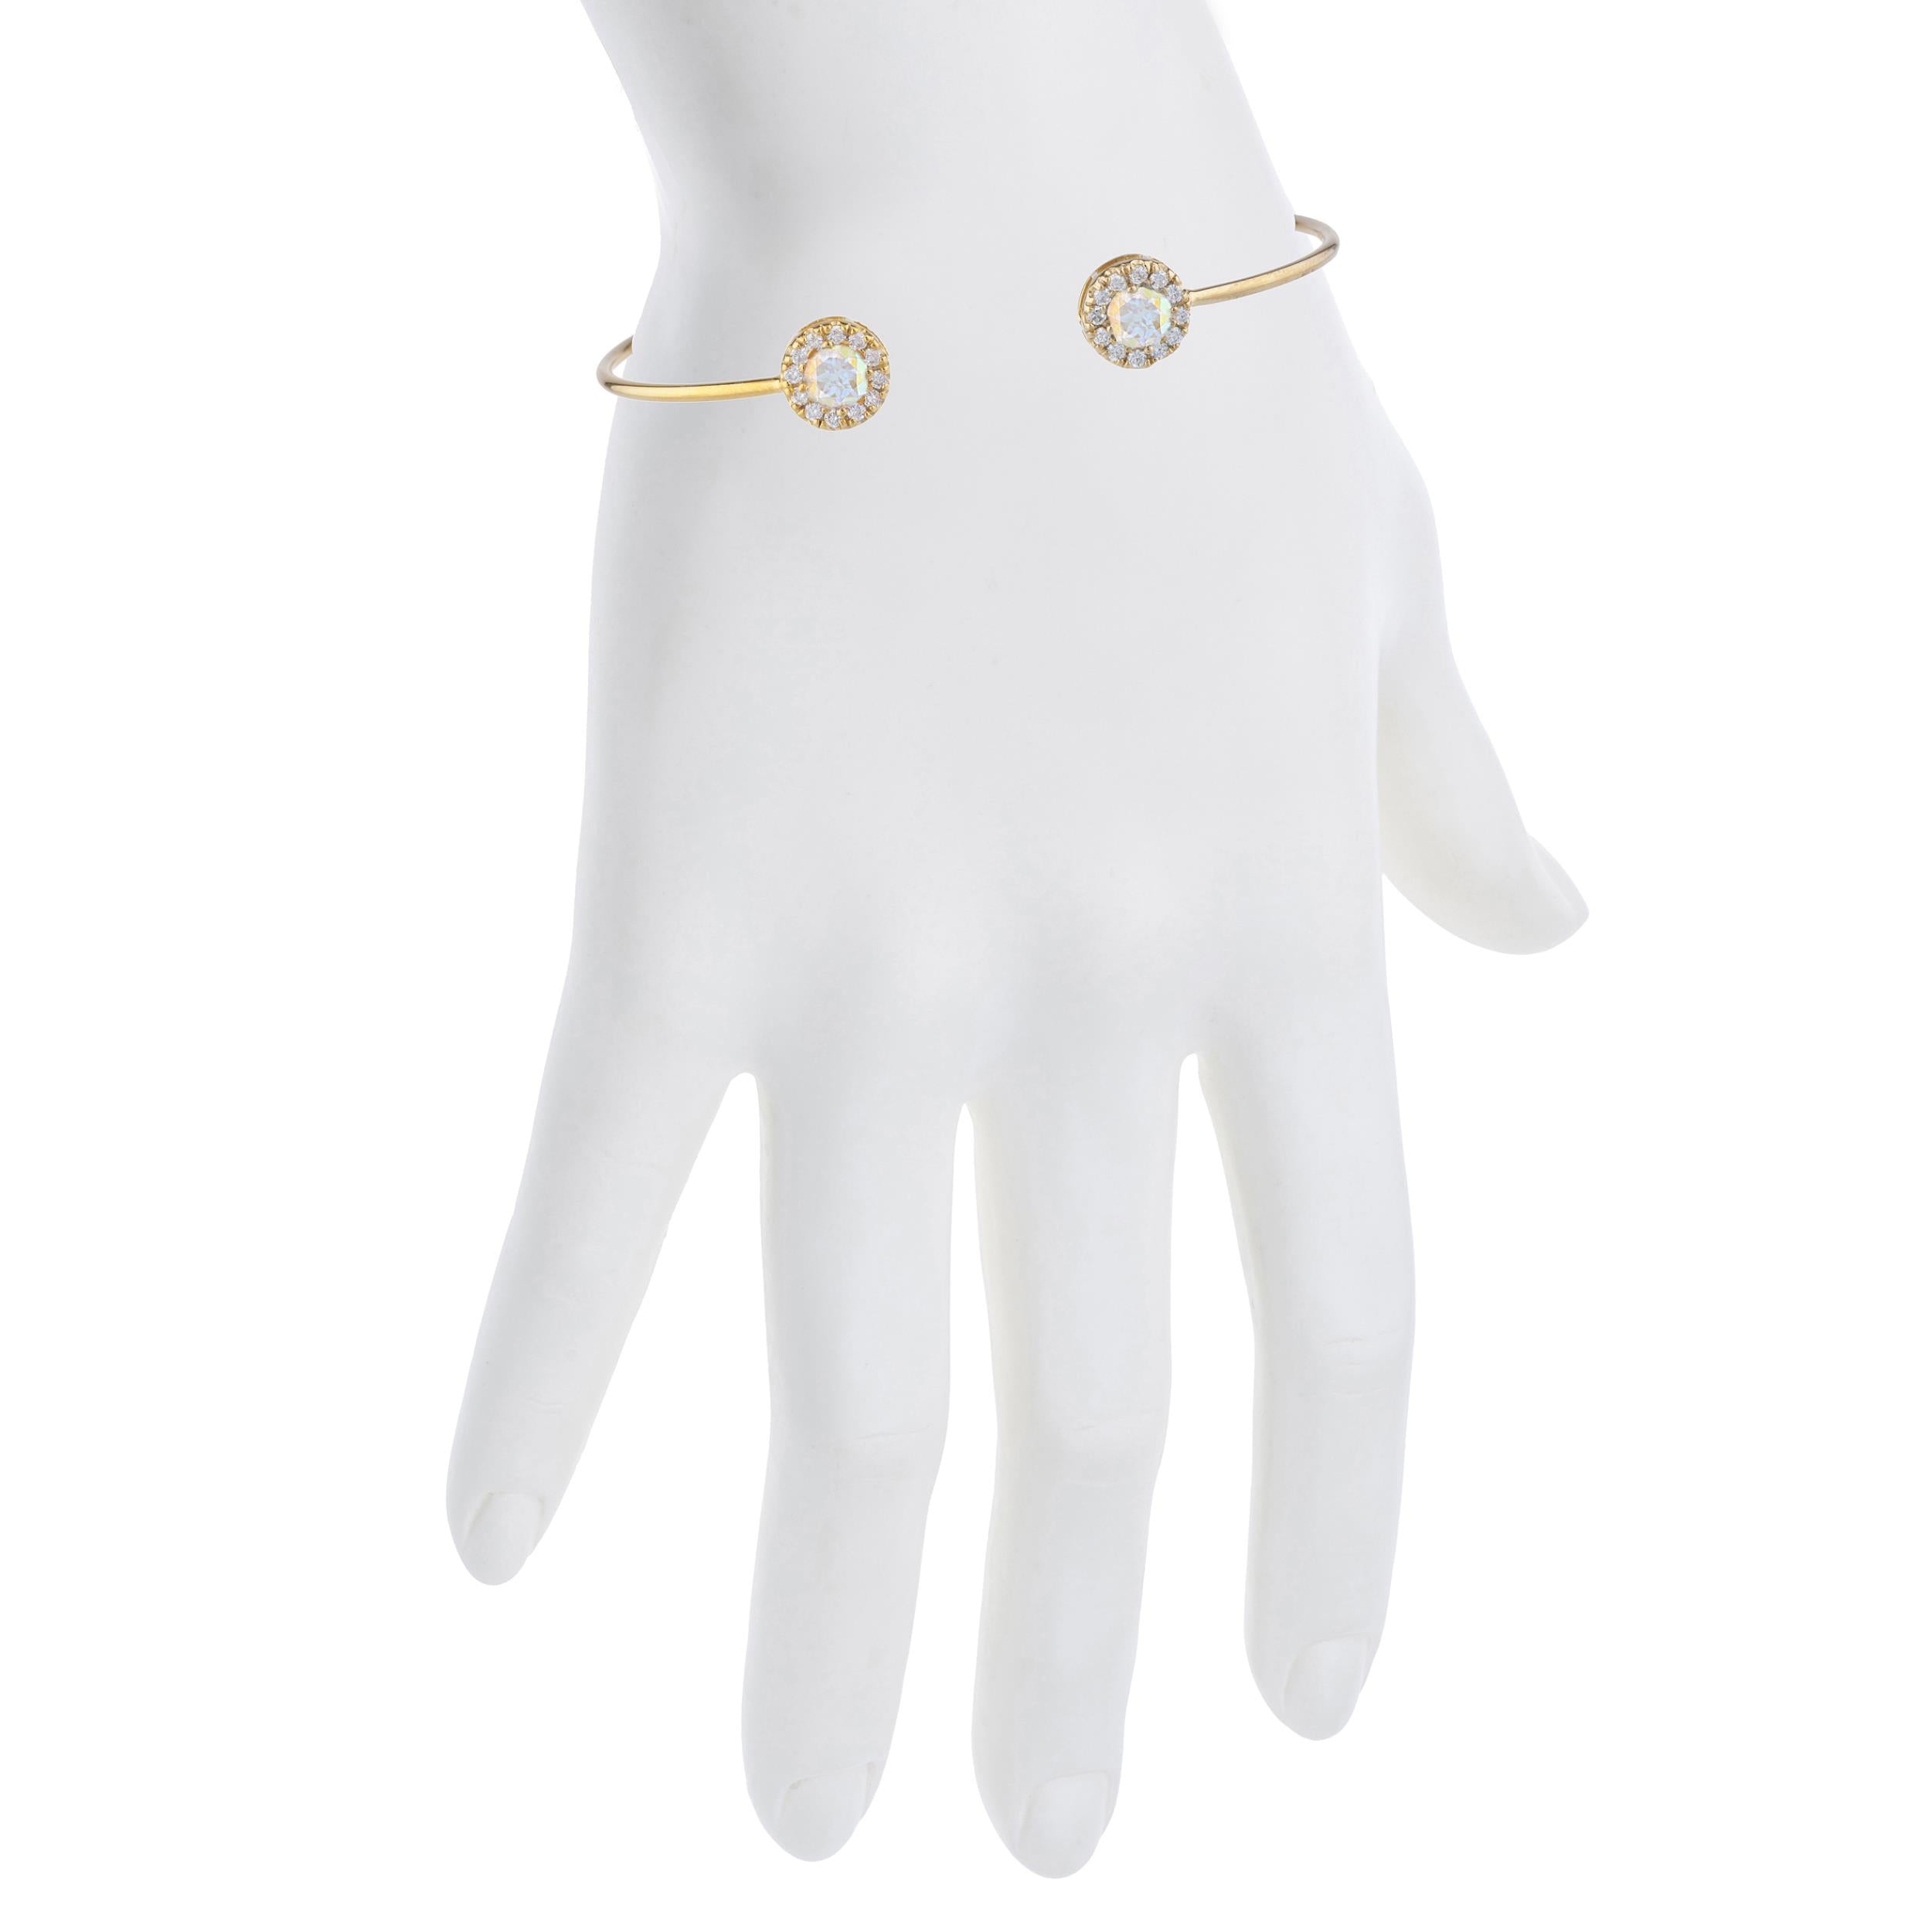 1 Ct Natural Mercury Mist Mystic Topaz Halo Design Round Bangle Bracelet 14Kt Yellow Gold Rose Gold Silver